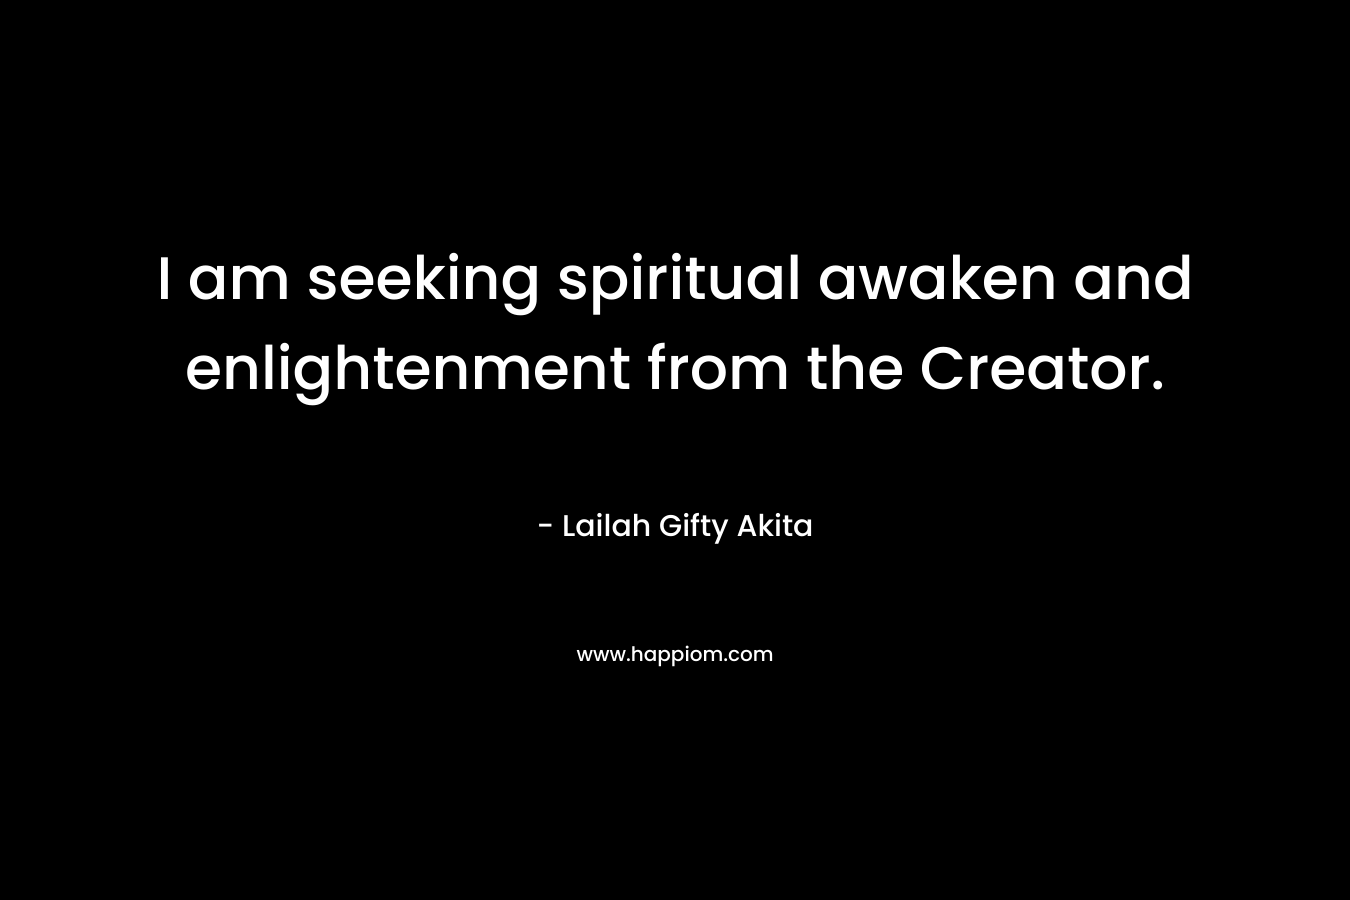 I am seeking spiritual awaken and enlightenment from the Creator.